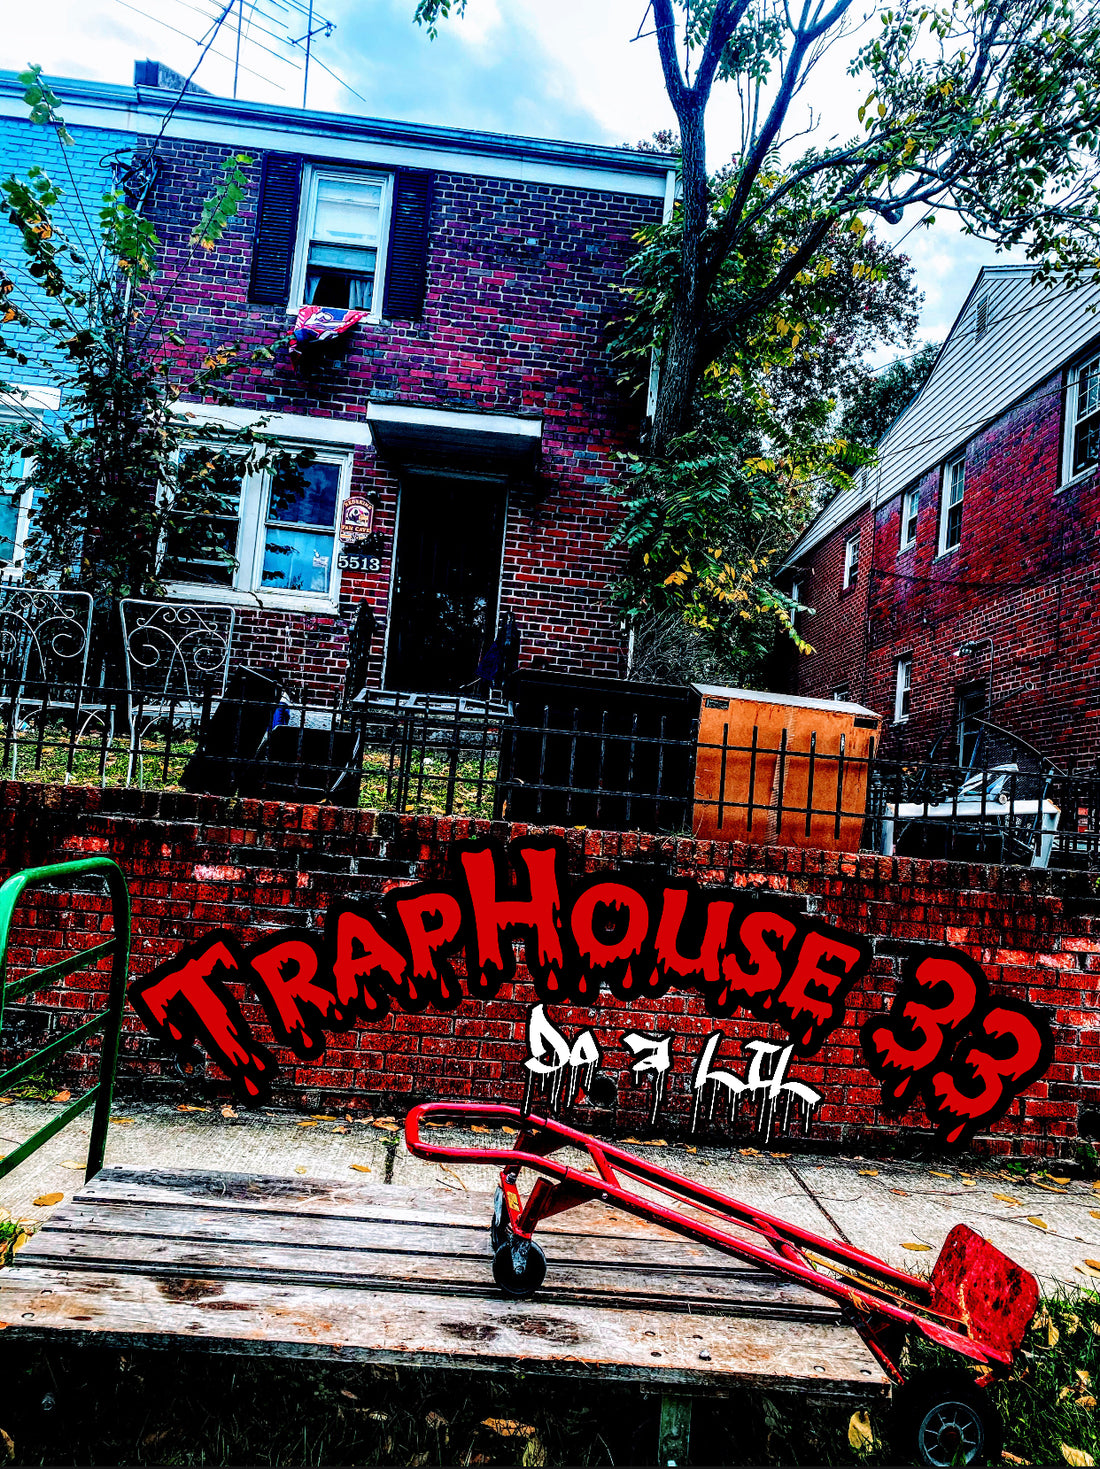 Trap house 33